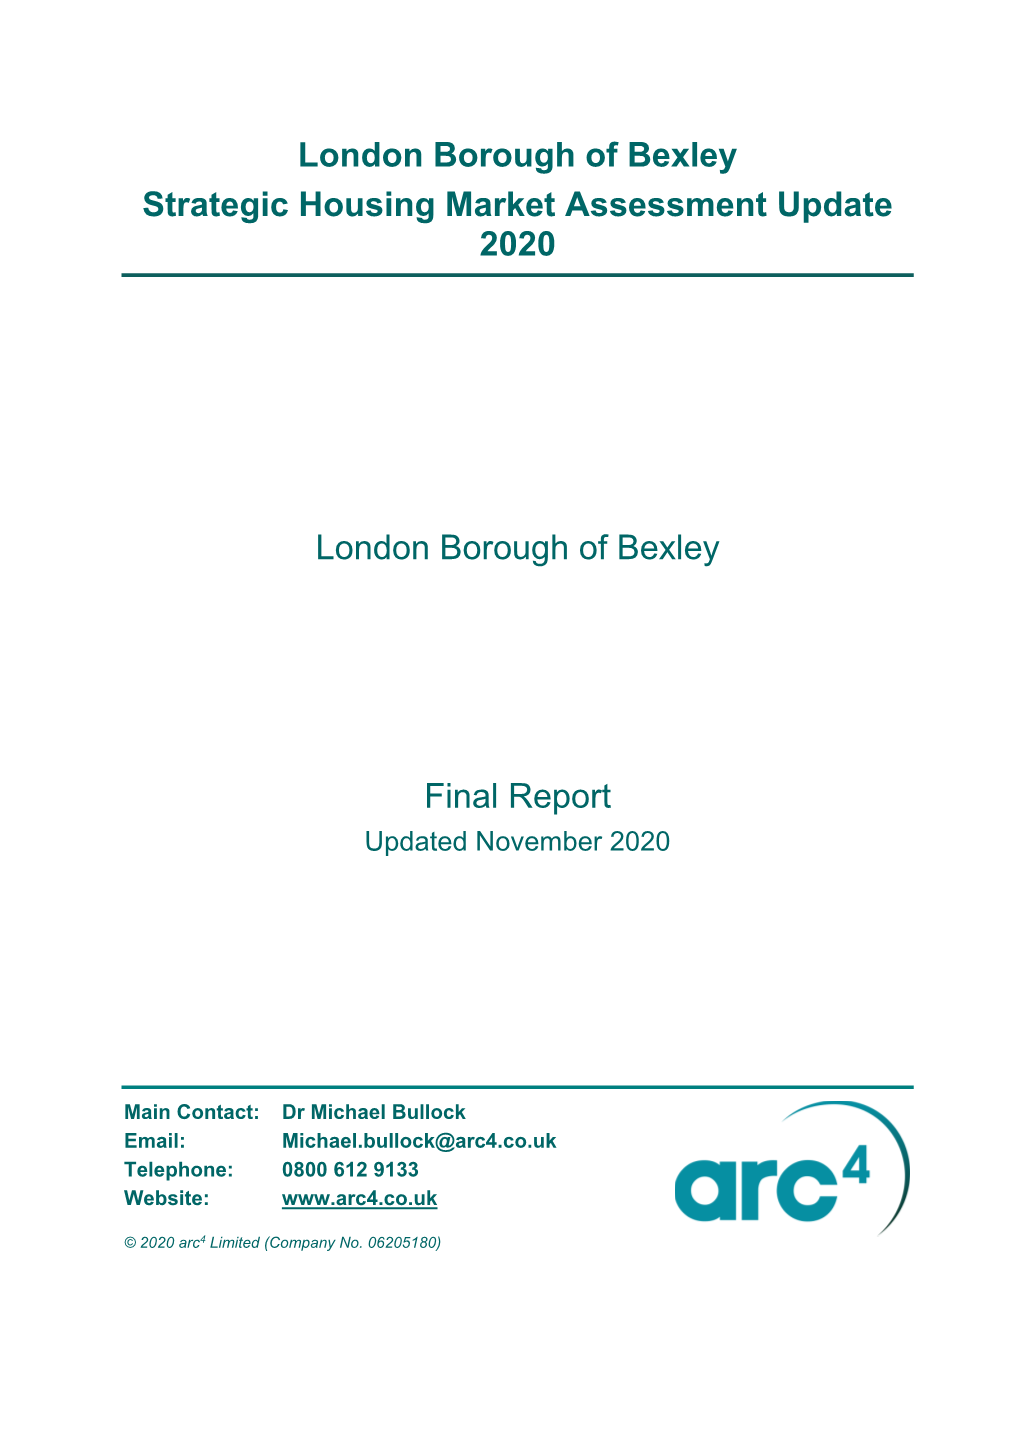 London Borough of Bexley Strategic Housing Market Assessment Update 2020